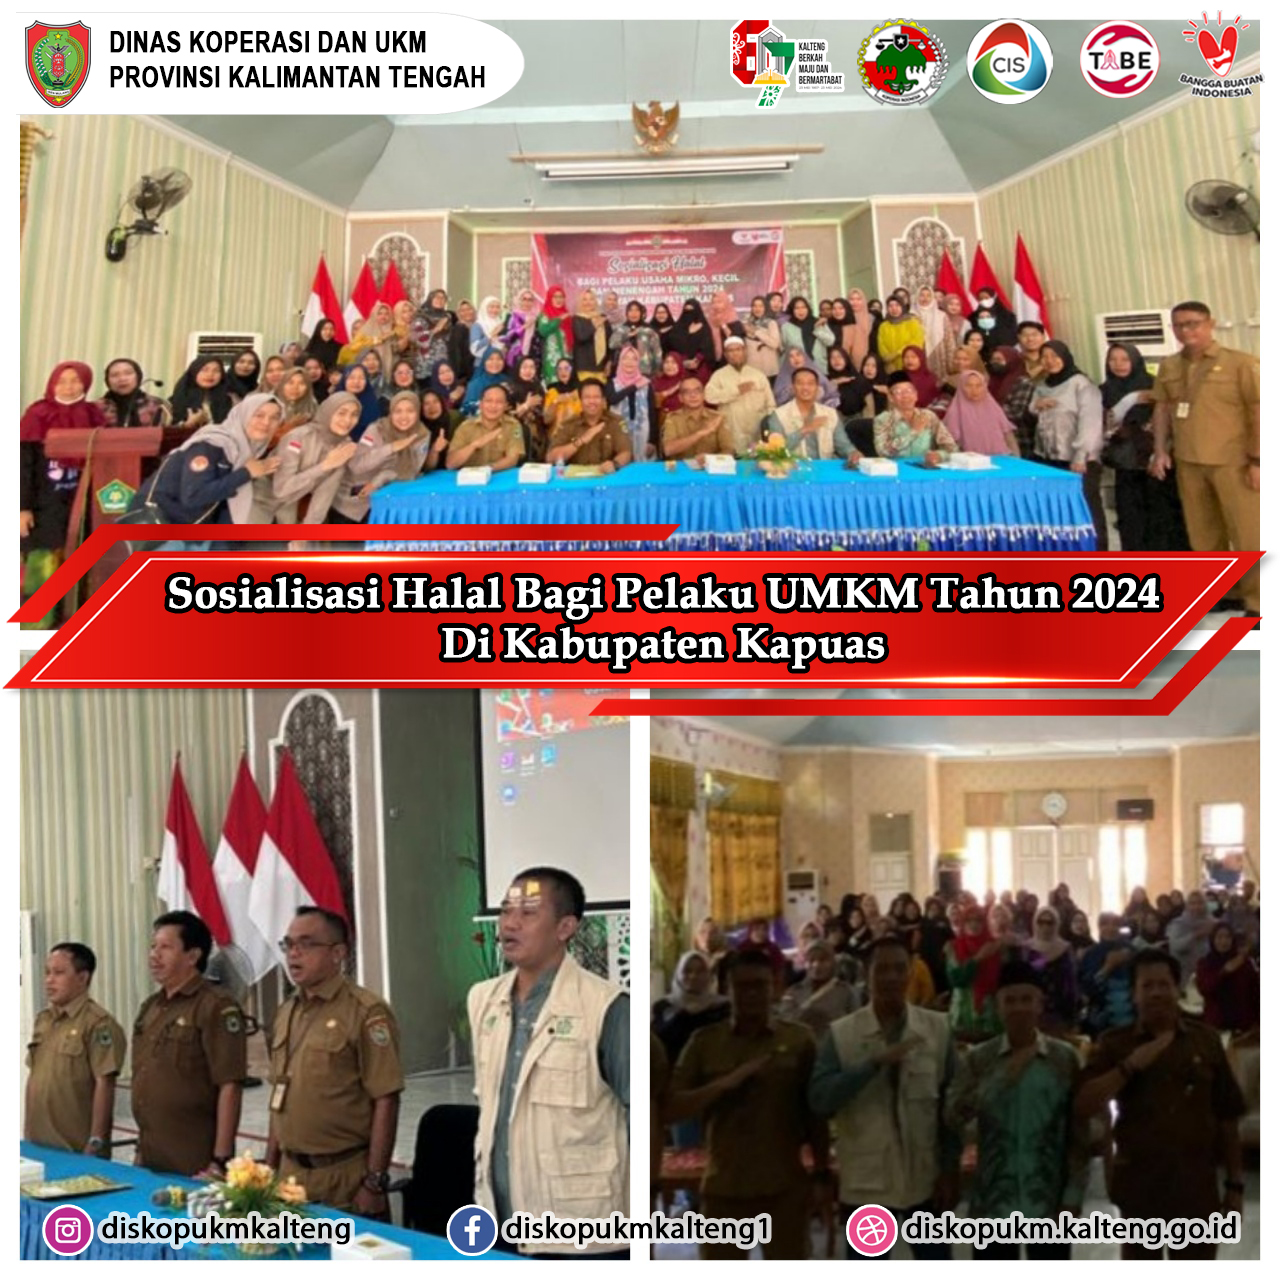 Sosialisasi Halal Bagi Pelaku UMKM di Kabupaten Kapuas